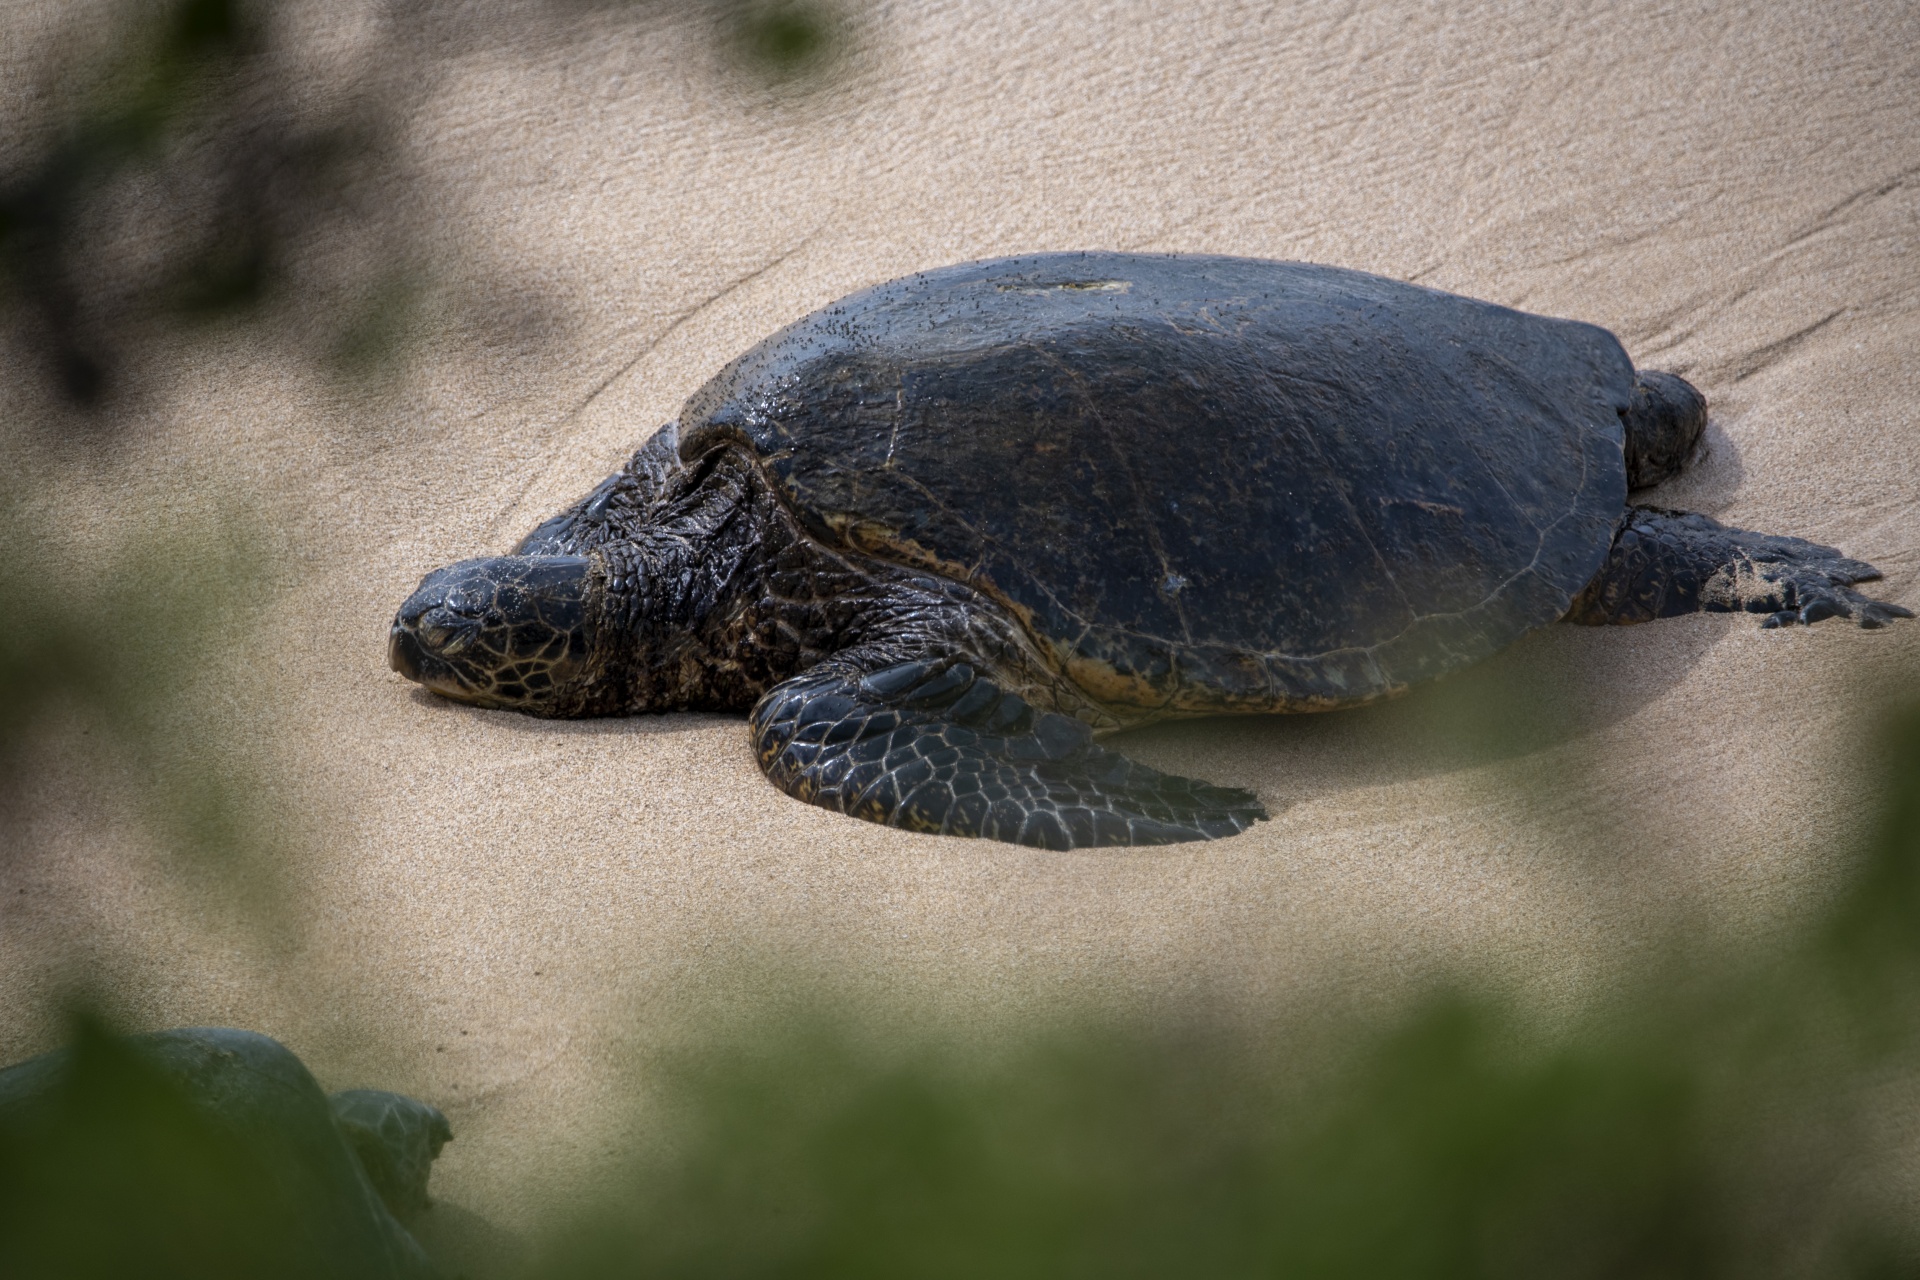 green sea turtles sleep on the beach shore in Maui Hawaii